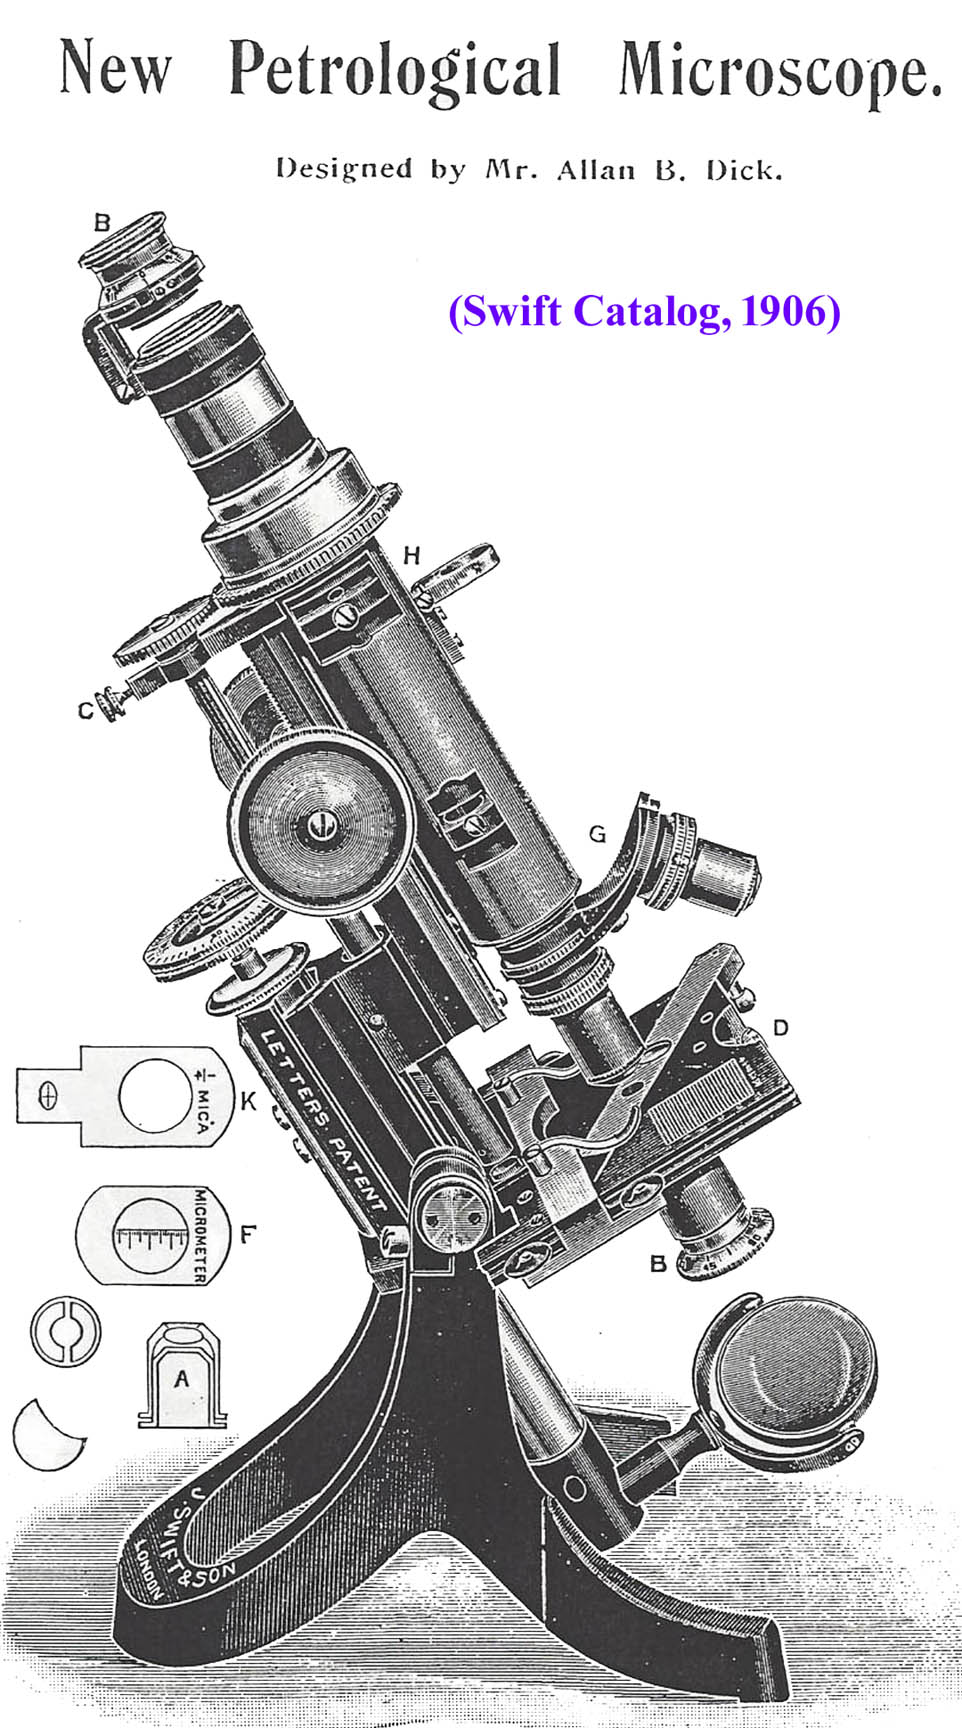 Dick microscope